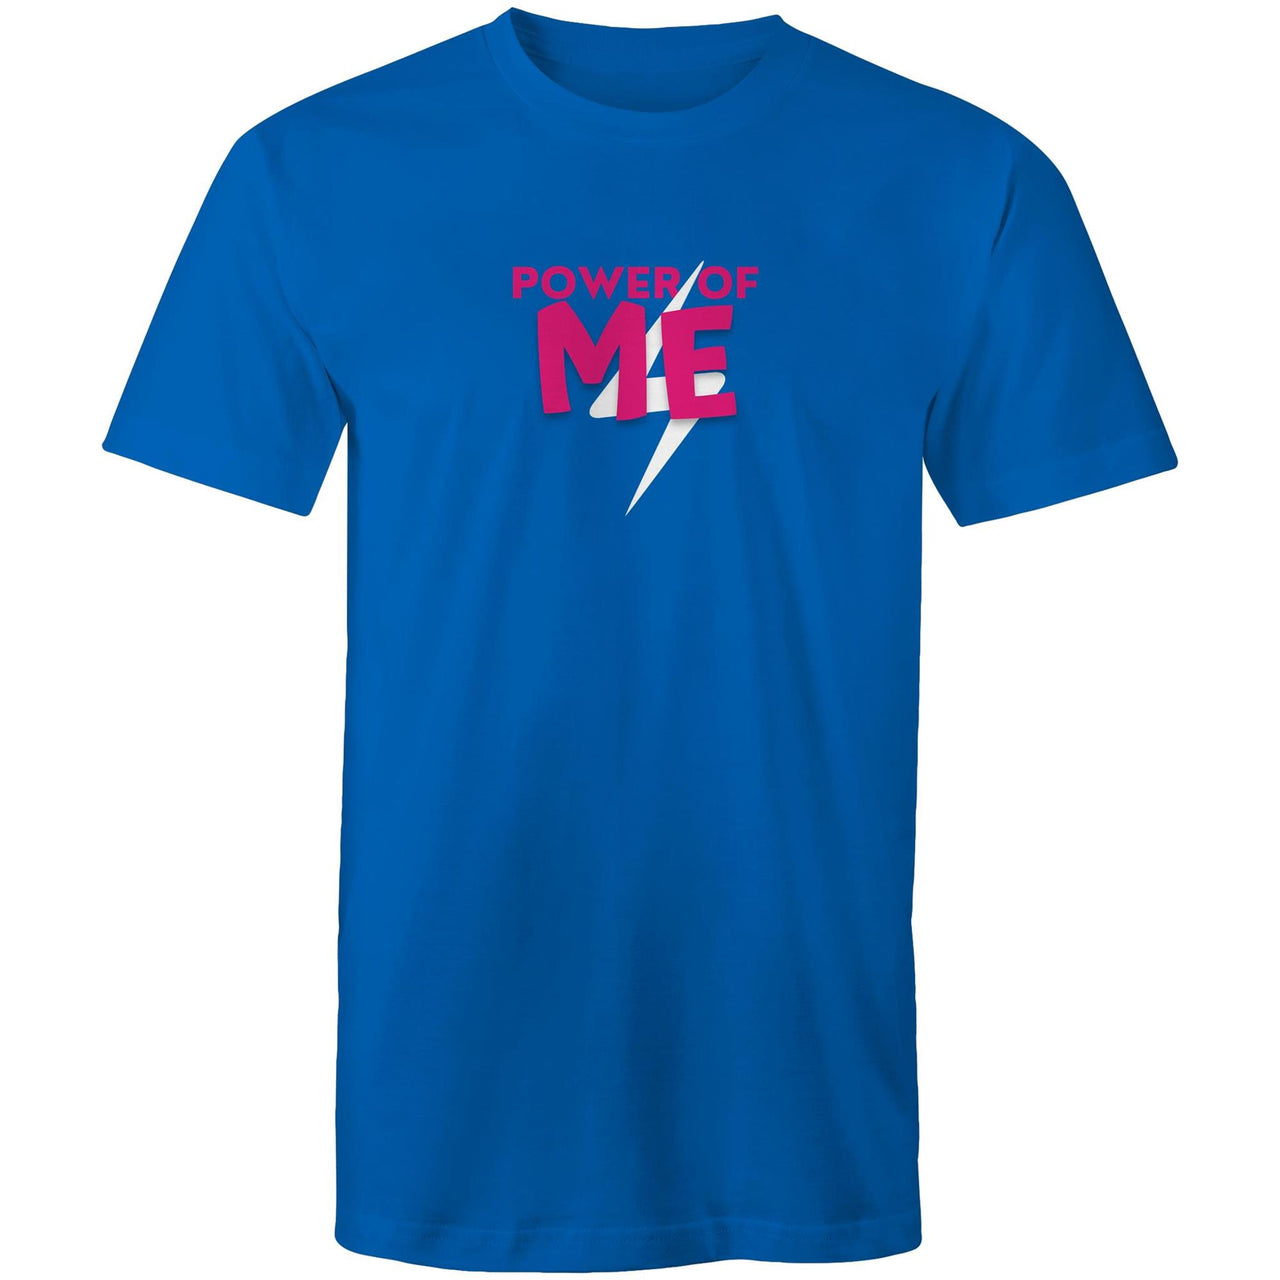 CBF Power of Me Crew T-Shirt blue by CBF Clothing